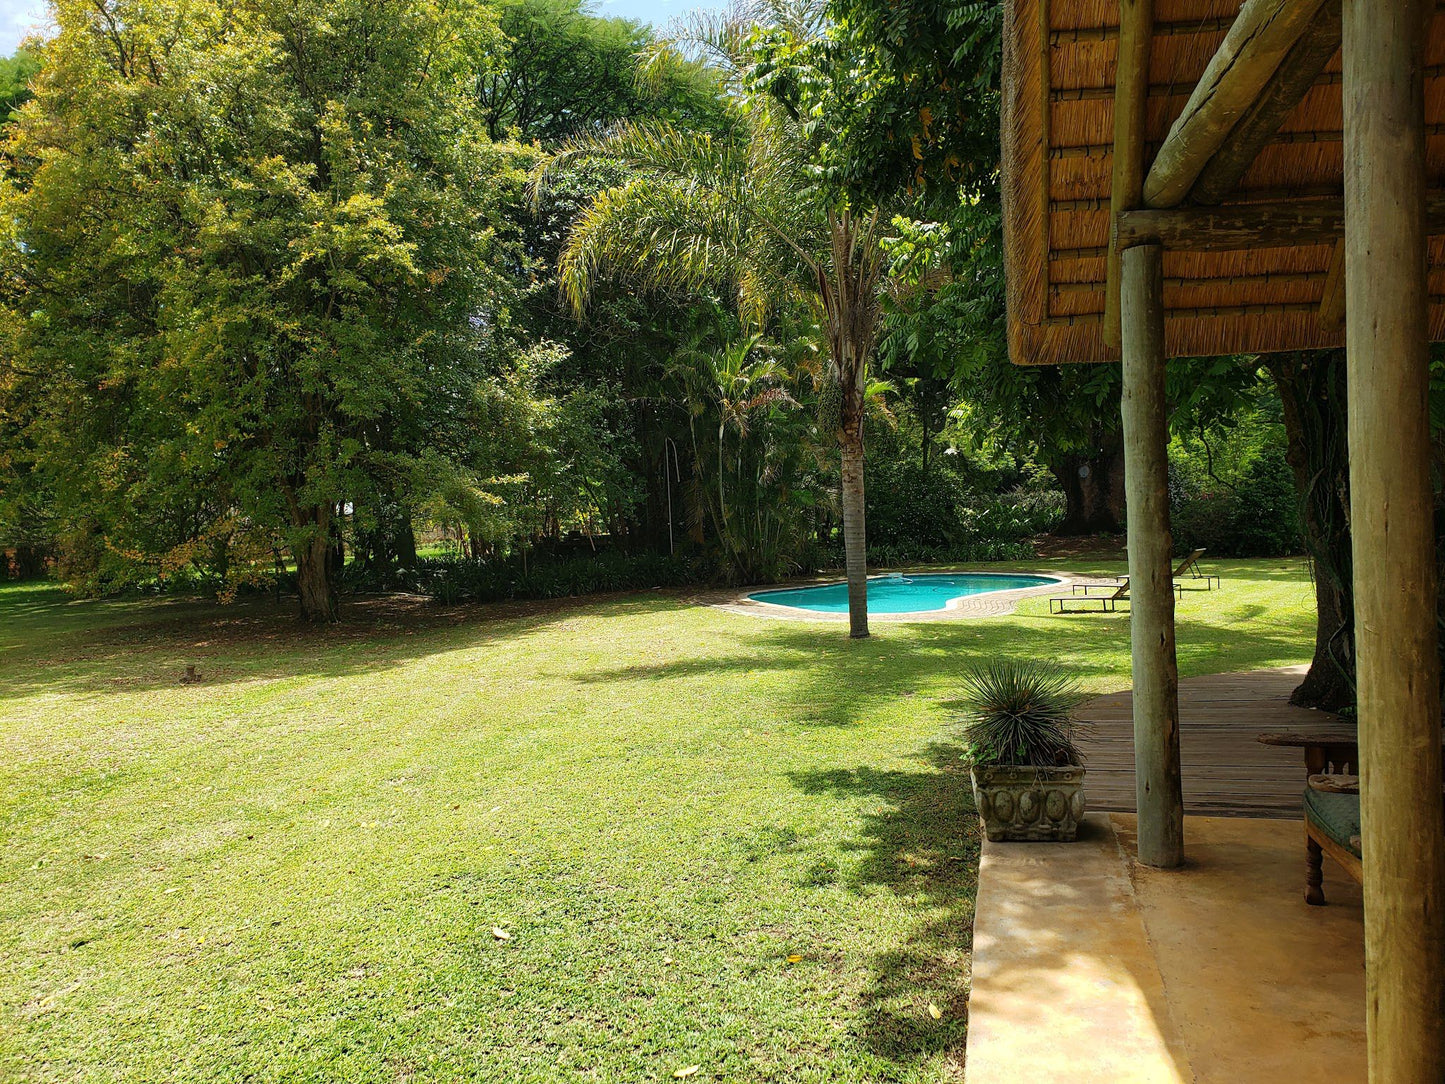 Seringa Lodge White River Mpumalanga South Africa Palm Tree, Plant, Nature, Wood, Garden, Swimming Pool